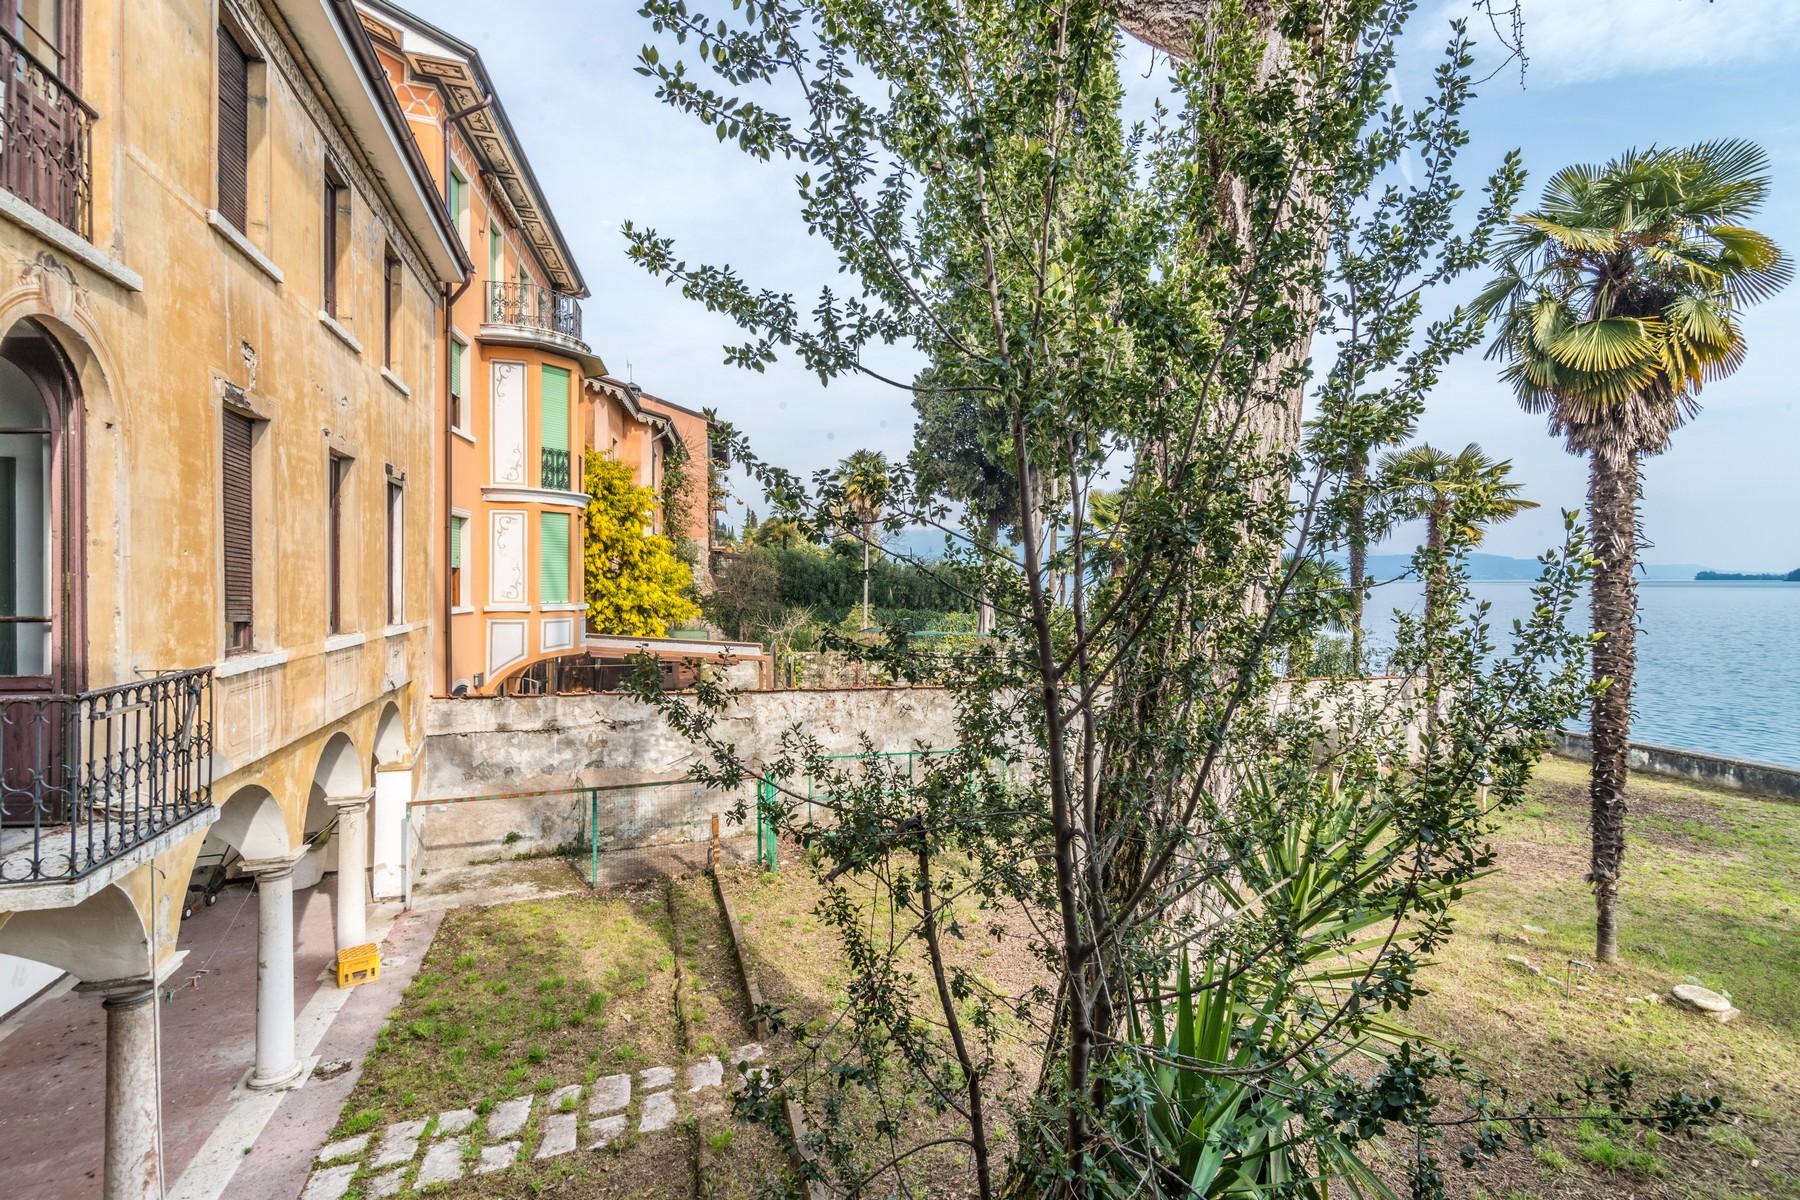 Дом на берегу! Вилла XVI века с панорамным видом на озеро Гарда, Италия - 3